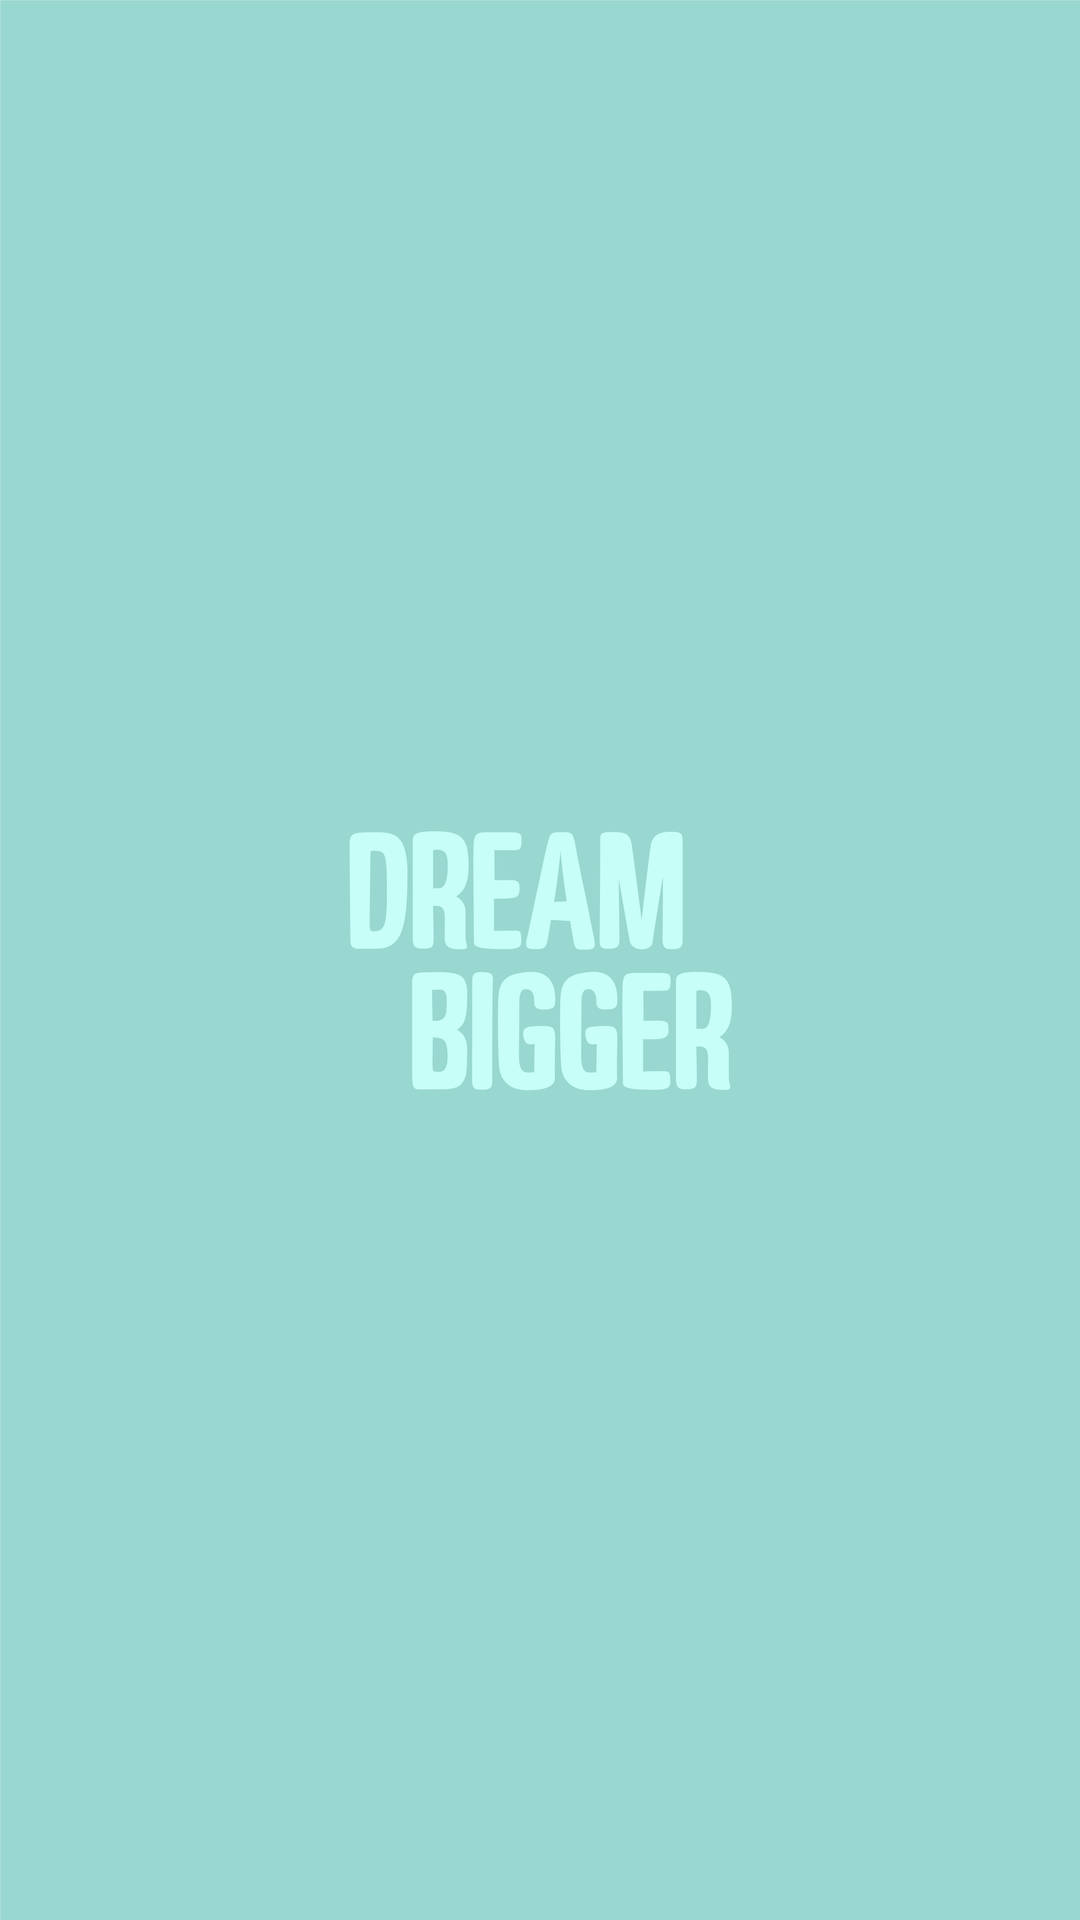 Minimalist Motivational Big Dreams Background